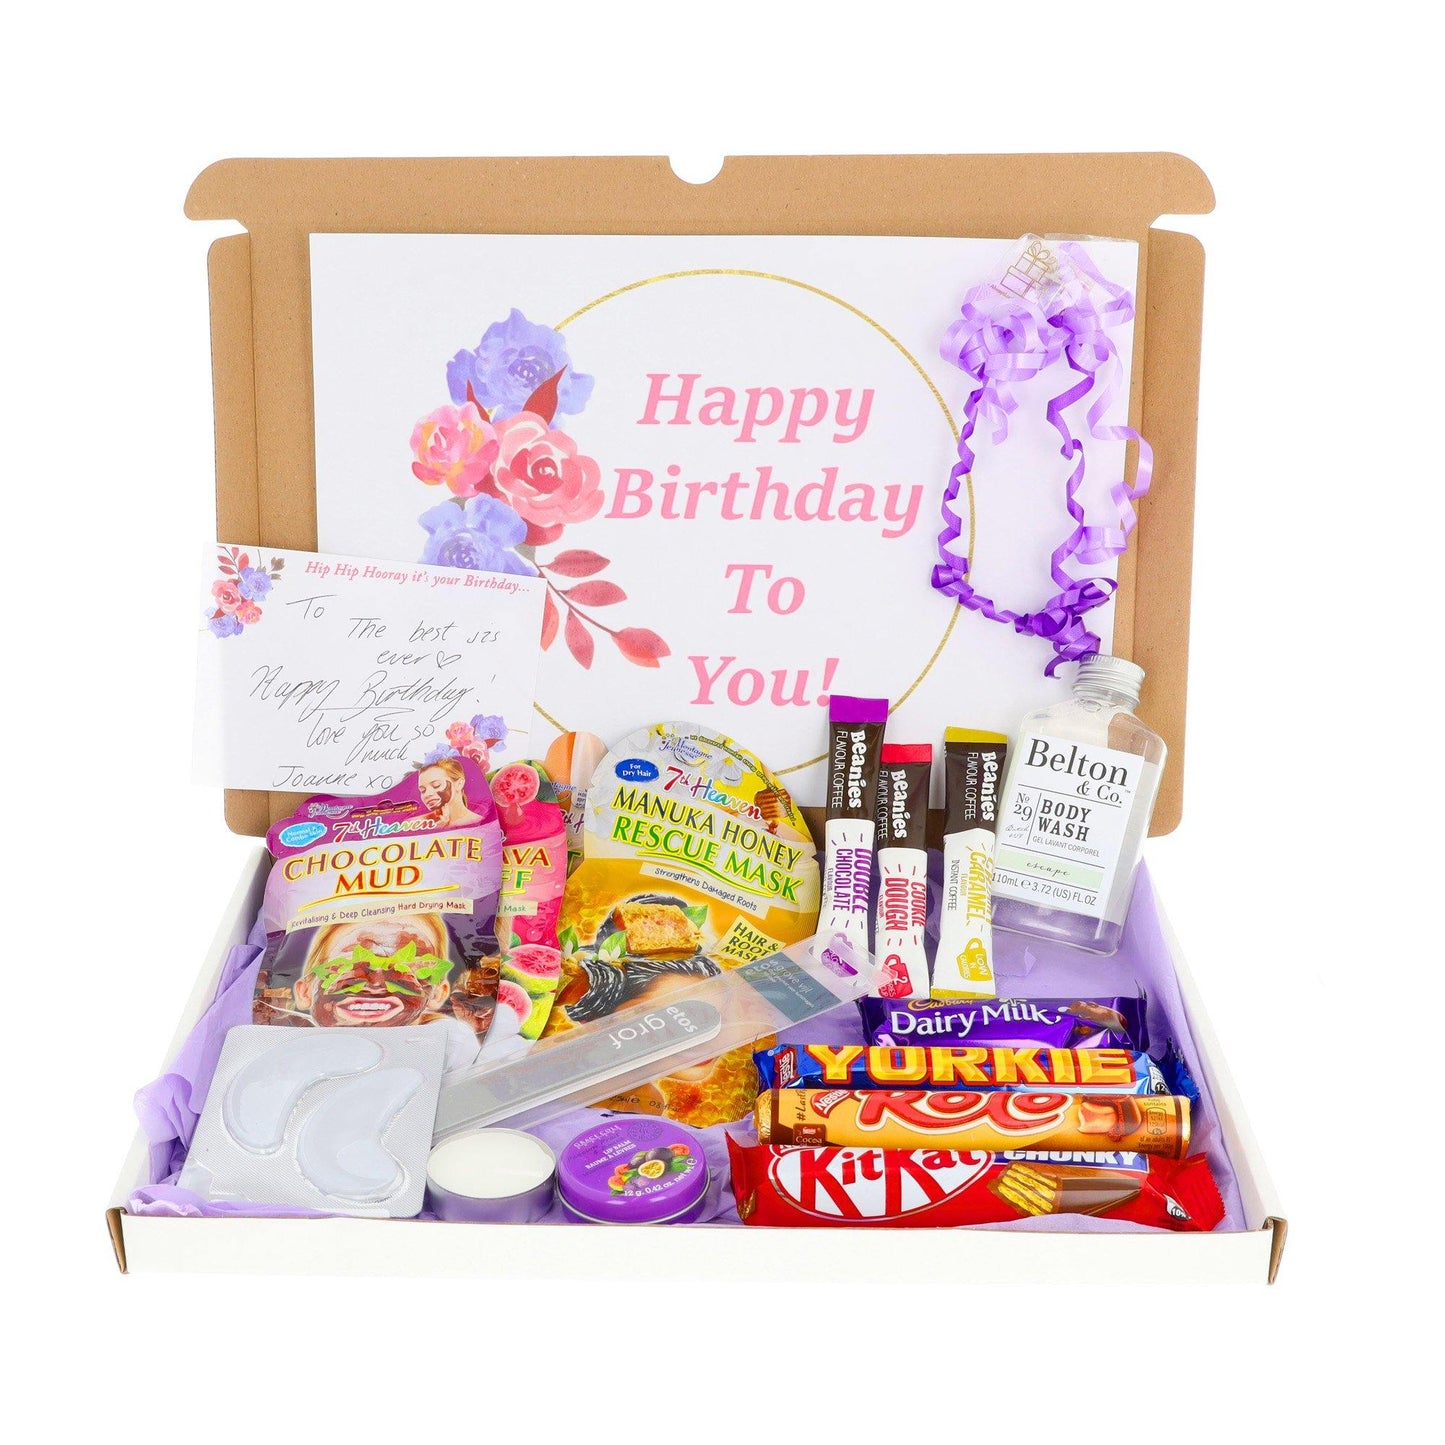 Large Pamper Treat Hamper Letterbox Gift for Ladies  - Always Looking Good -   